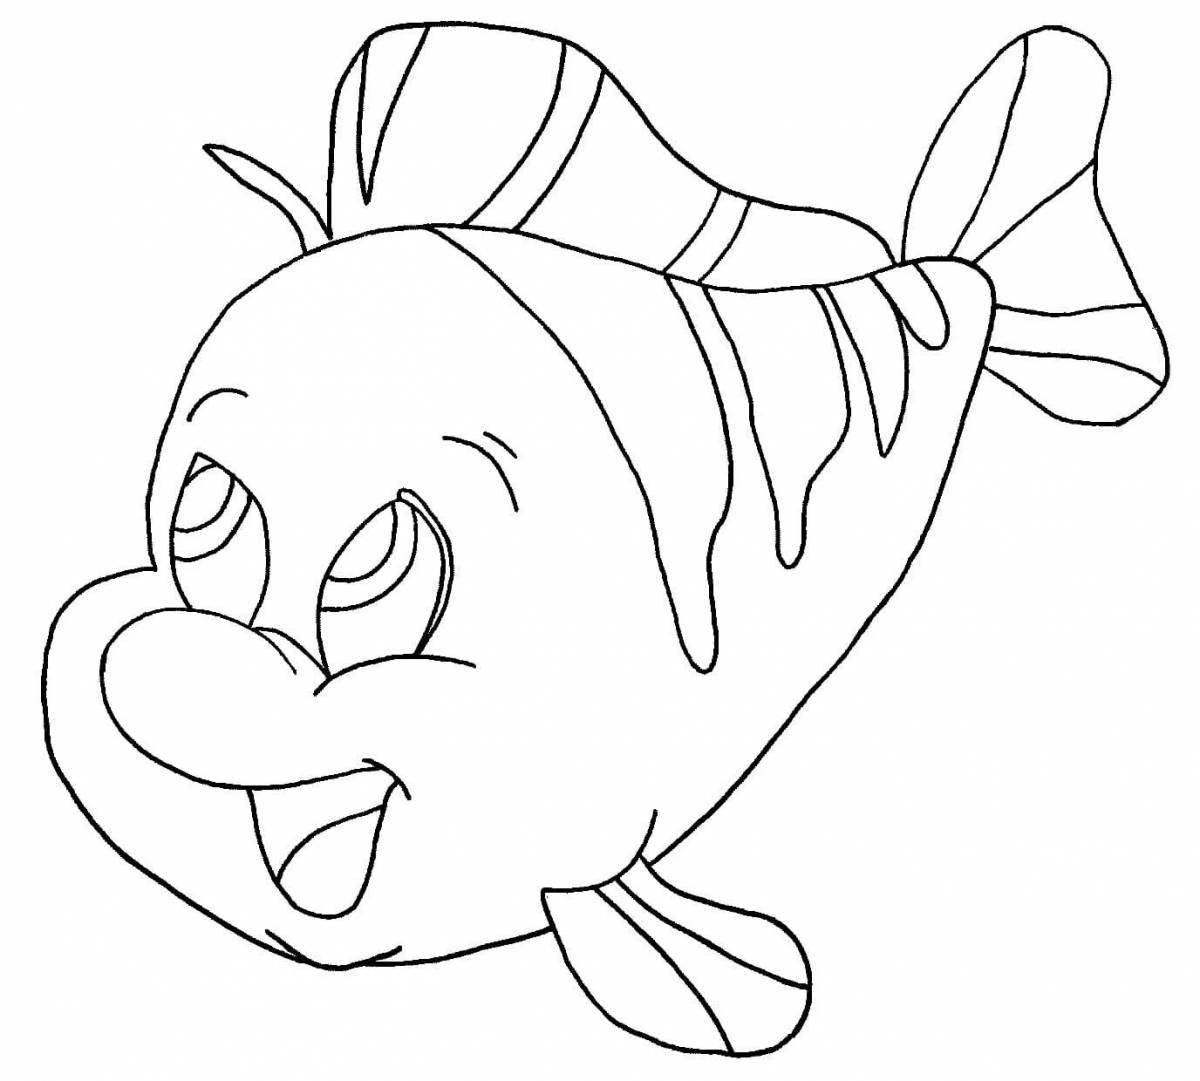 Stimulating fish drawing for kids